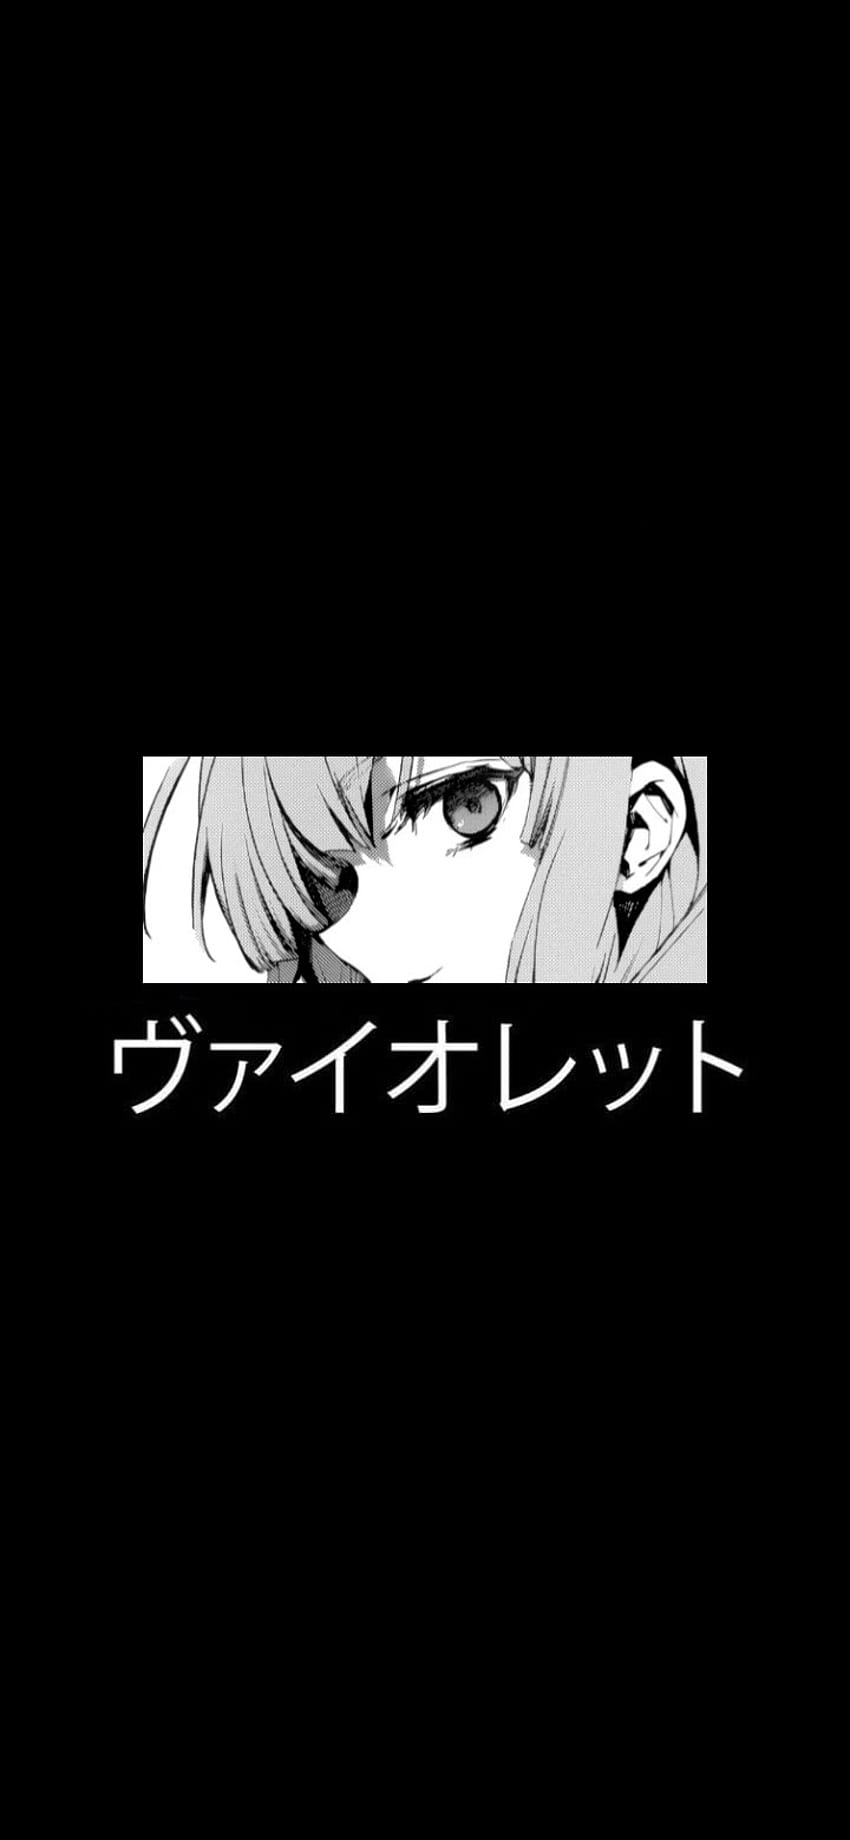 Dark anime aesthetic Wallpaper Download  MobCup